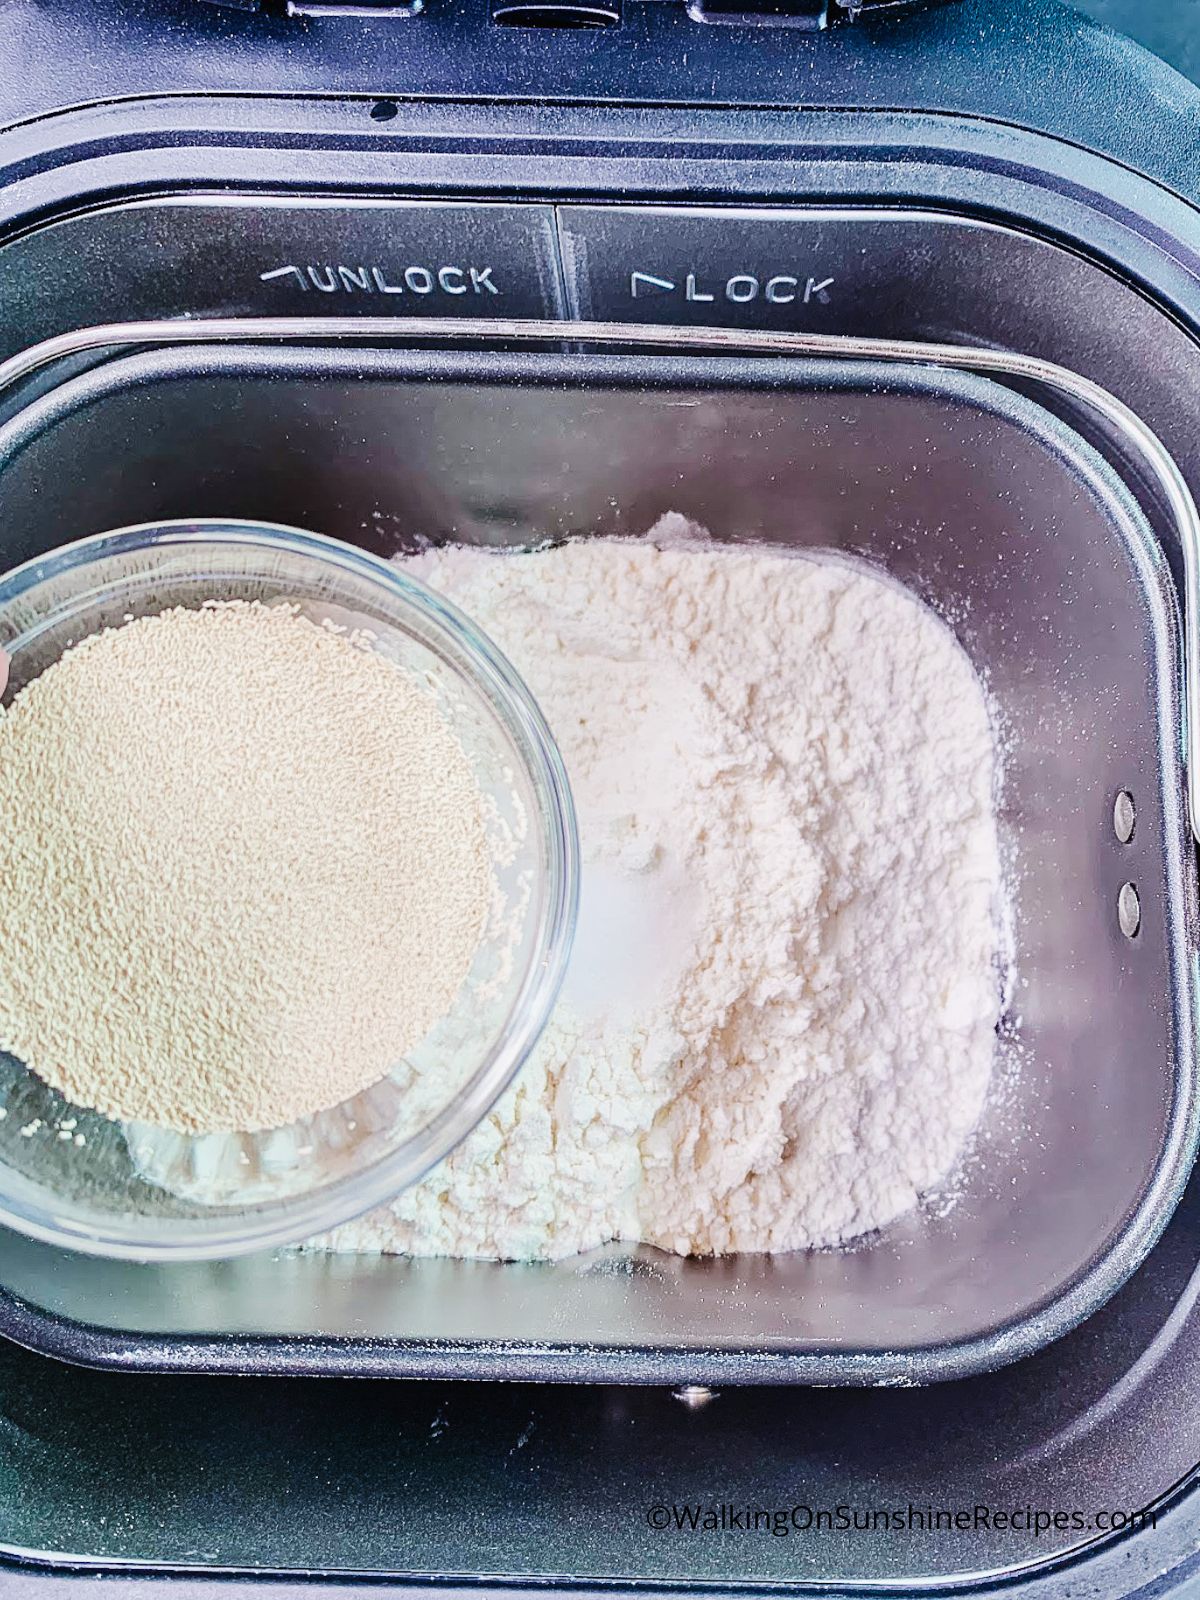 Add yeast to bread machine.